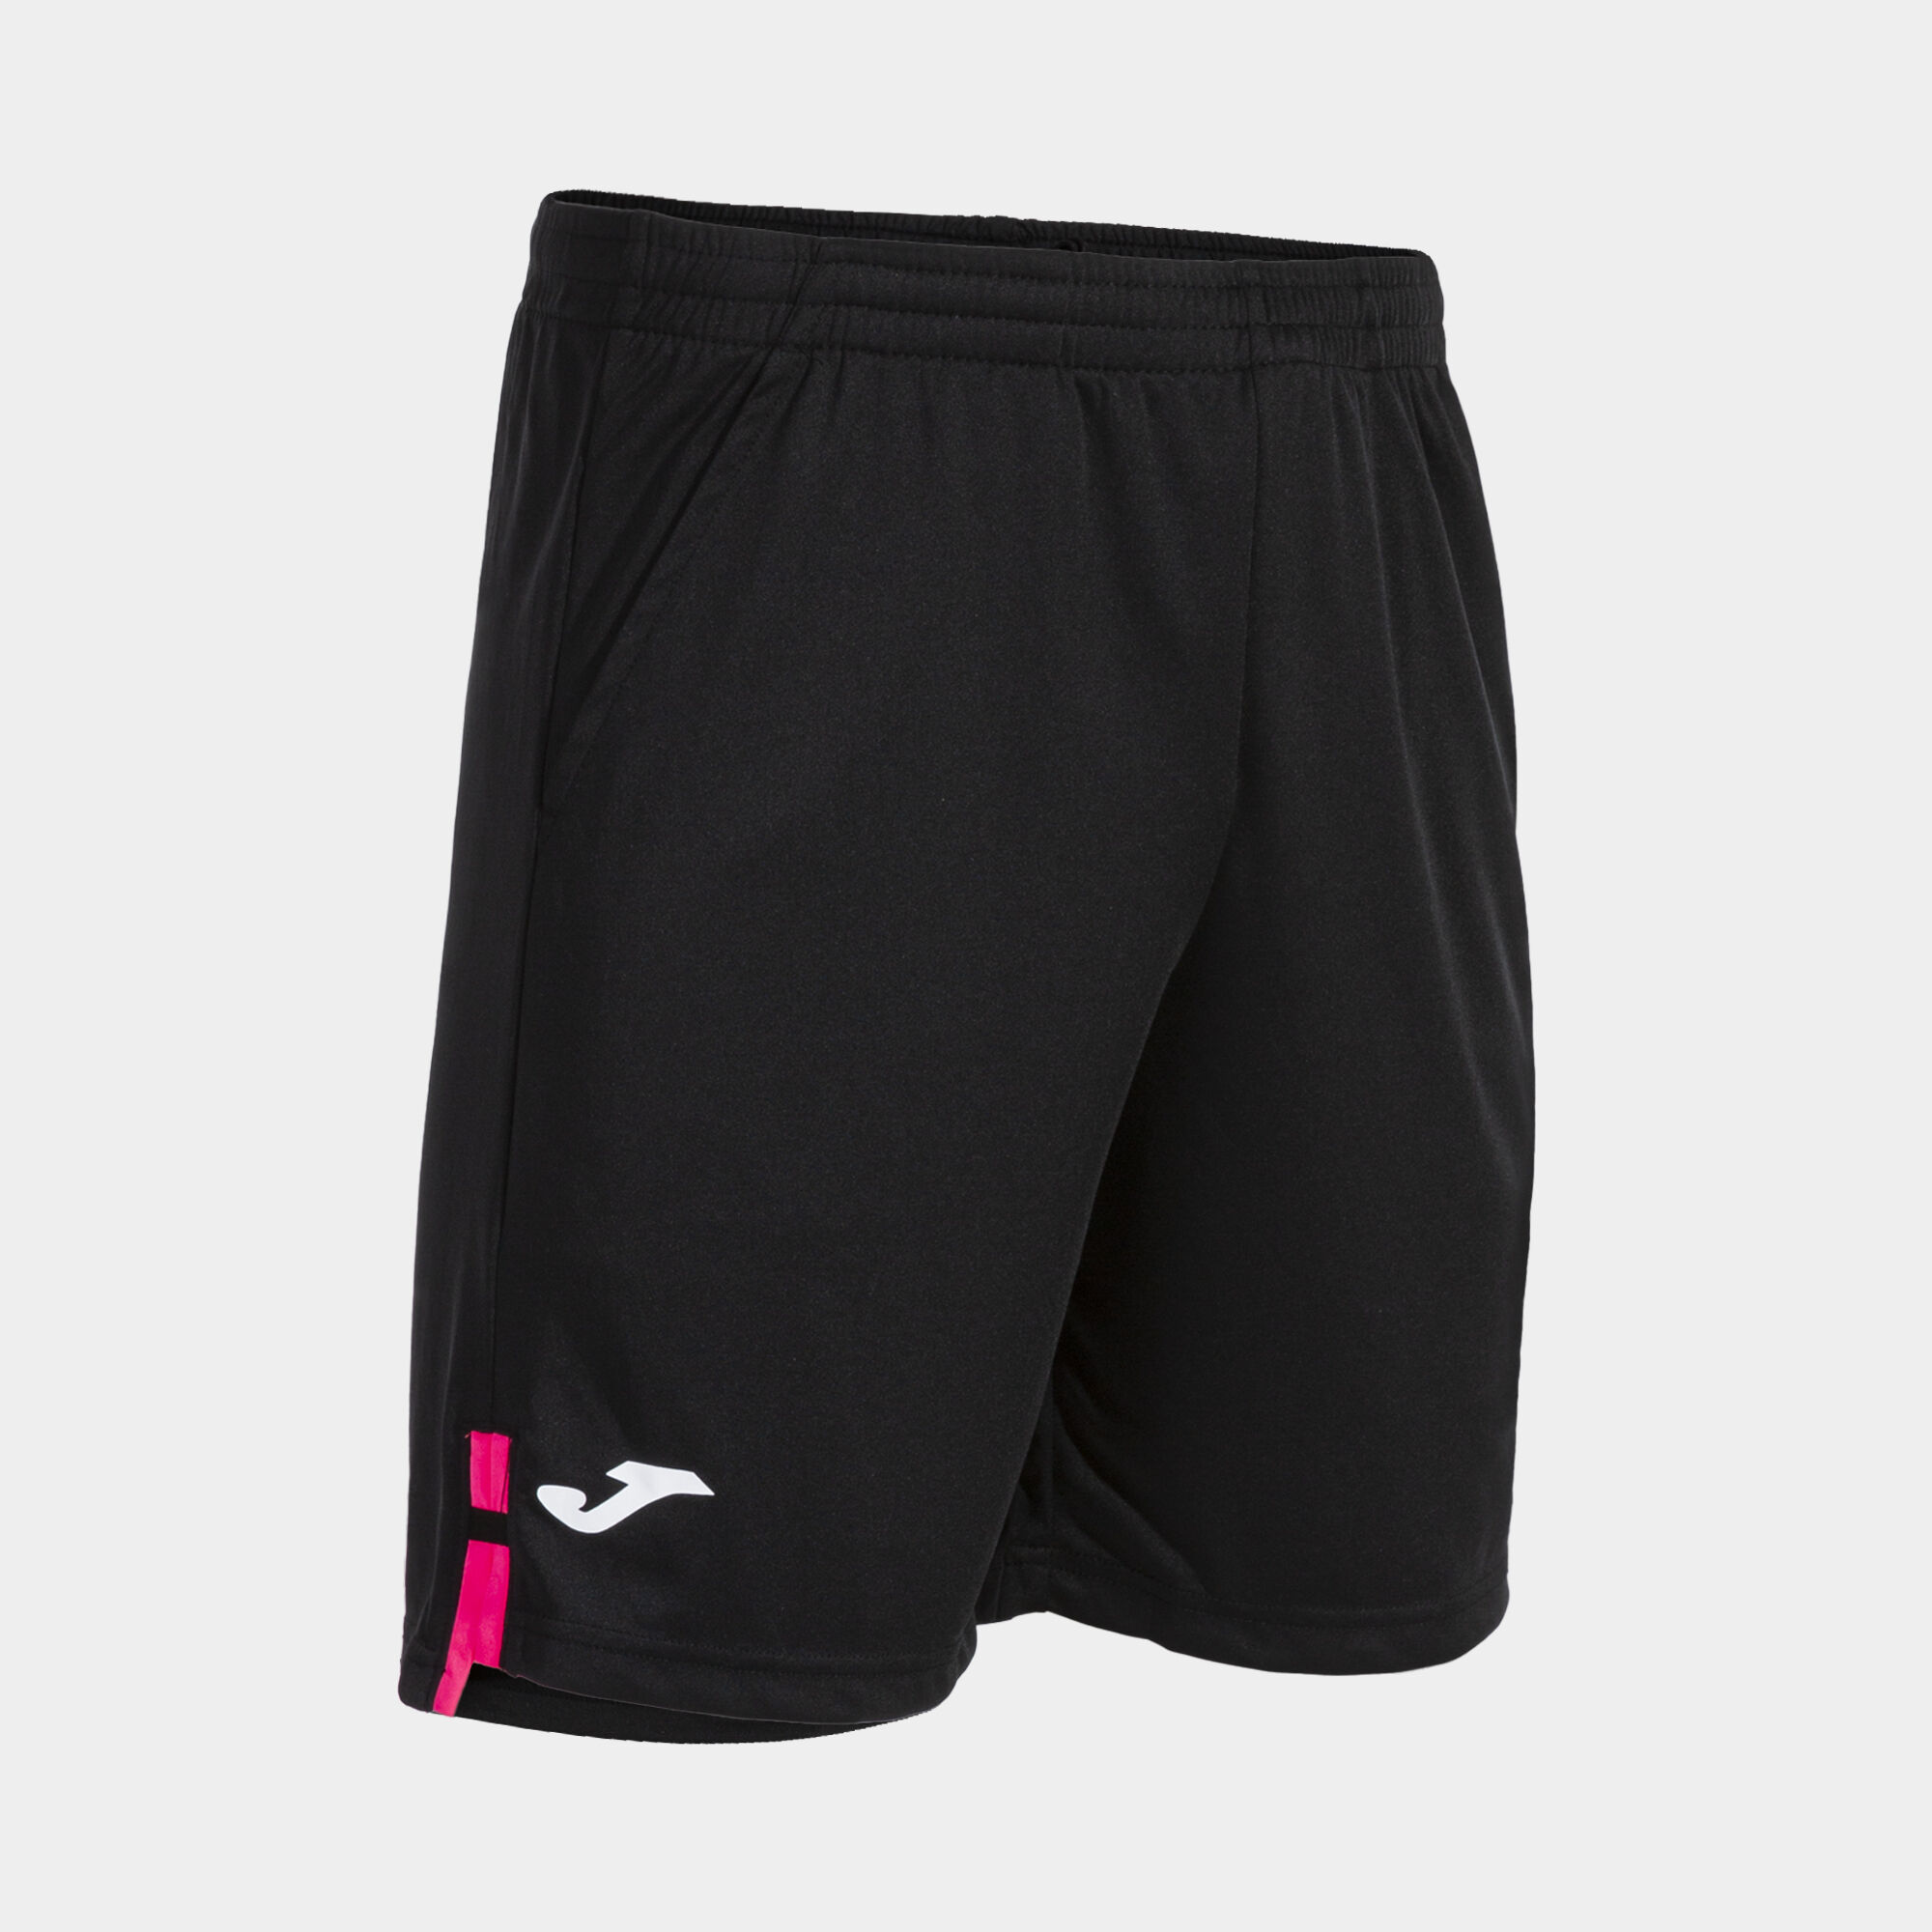 Shorts man Ranking black fluorescent pink